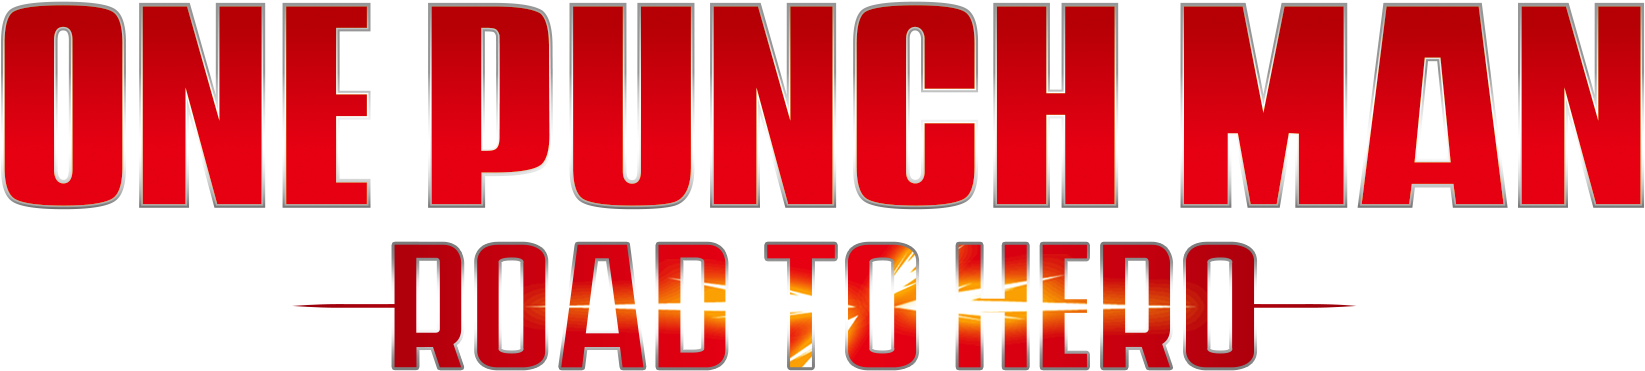 One Punch Man Road To Hero Logo